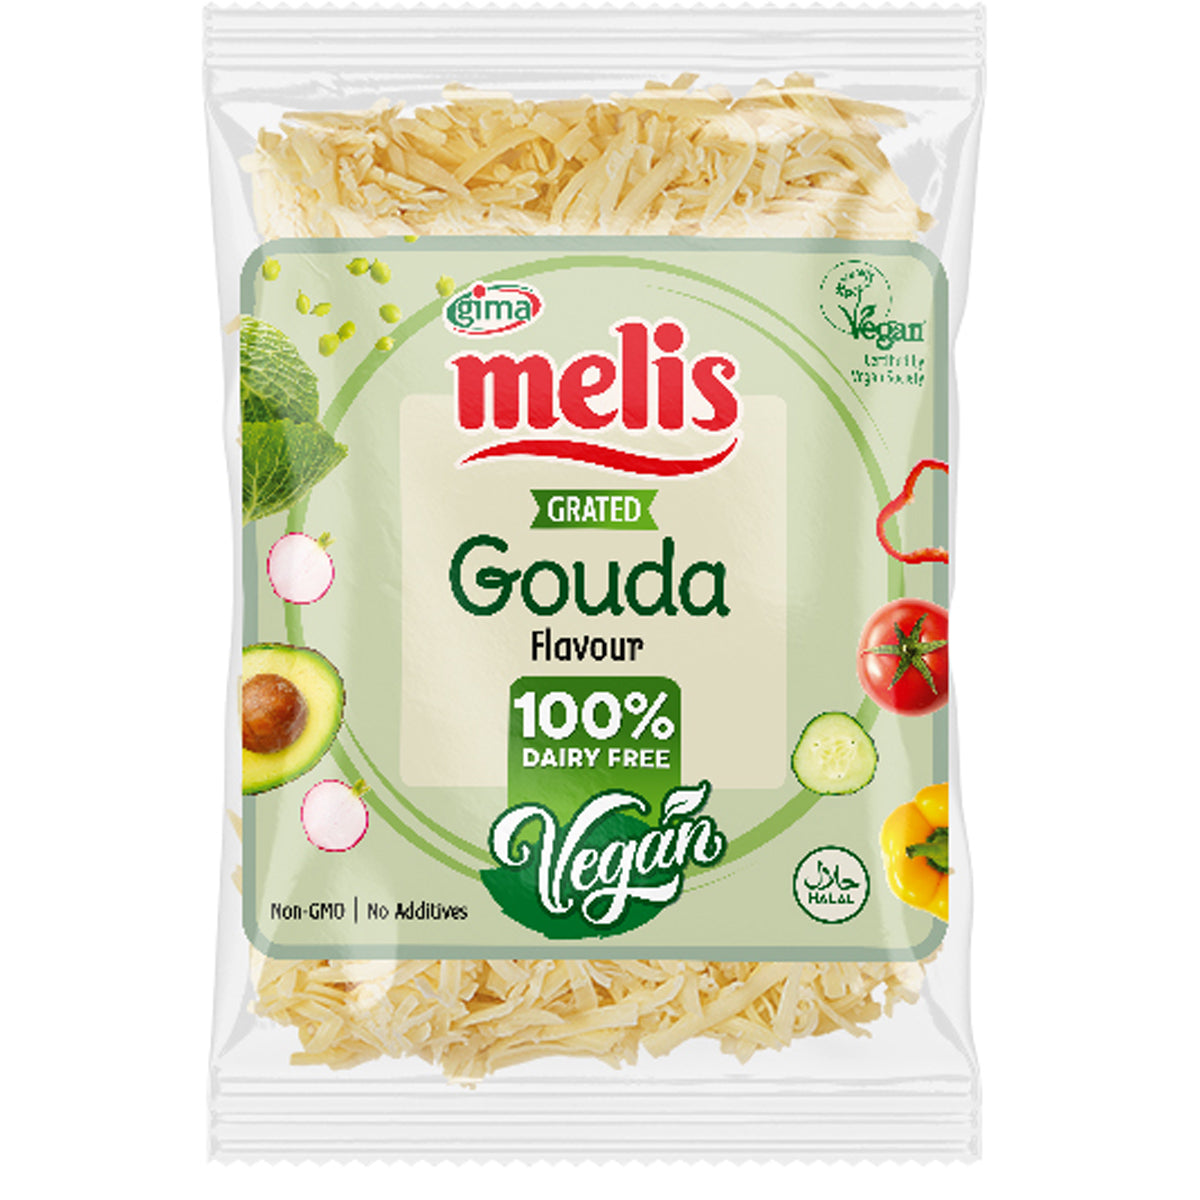 A bag of Melis - Vegan Grated Gouda Cheese - 200g flower.